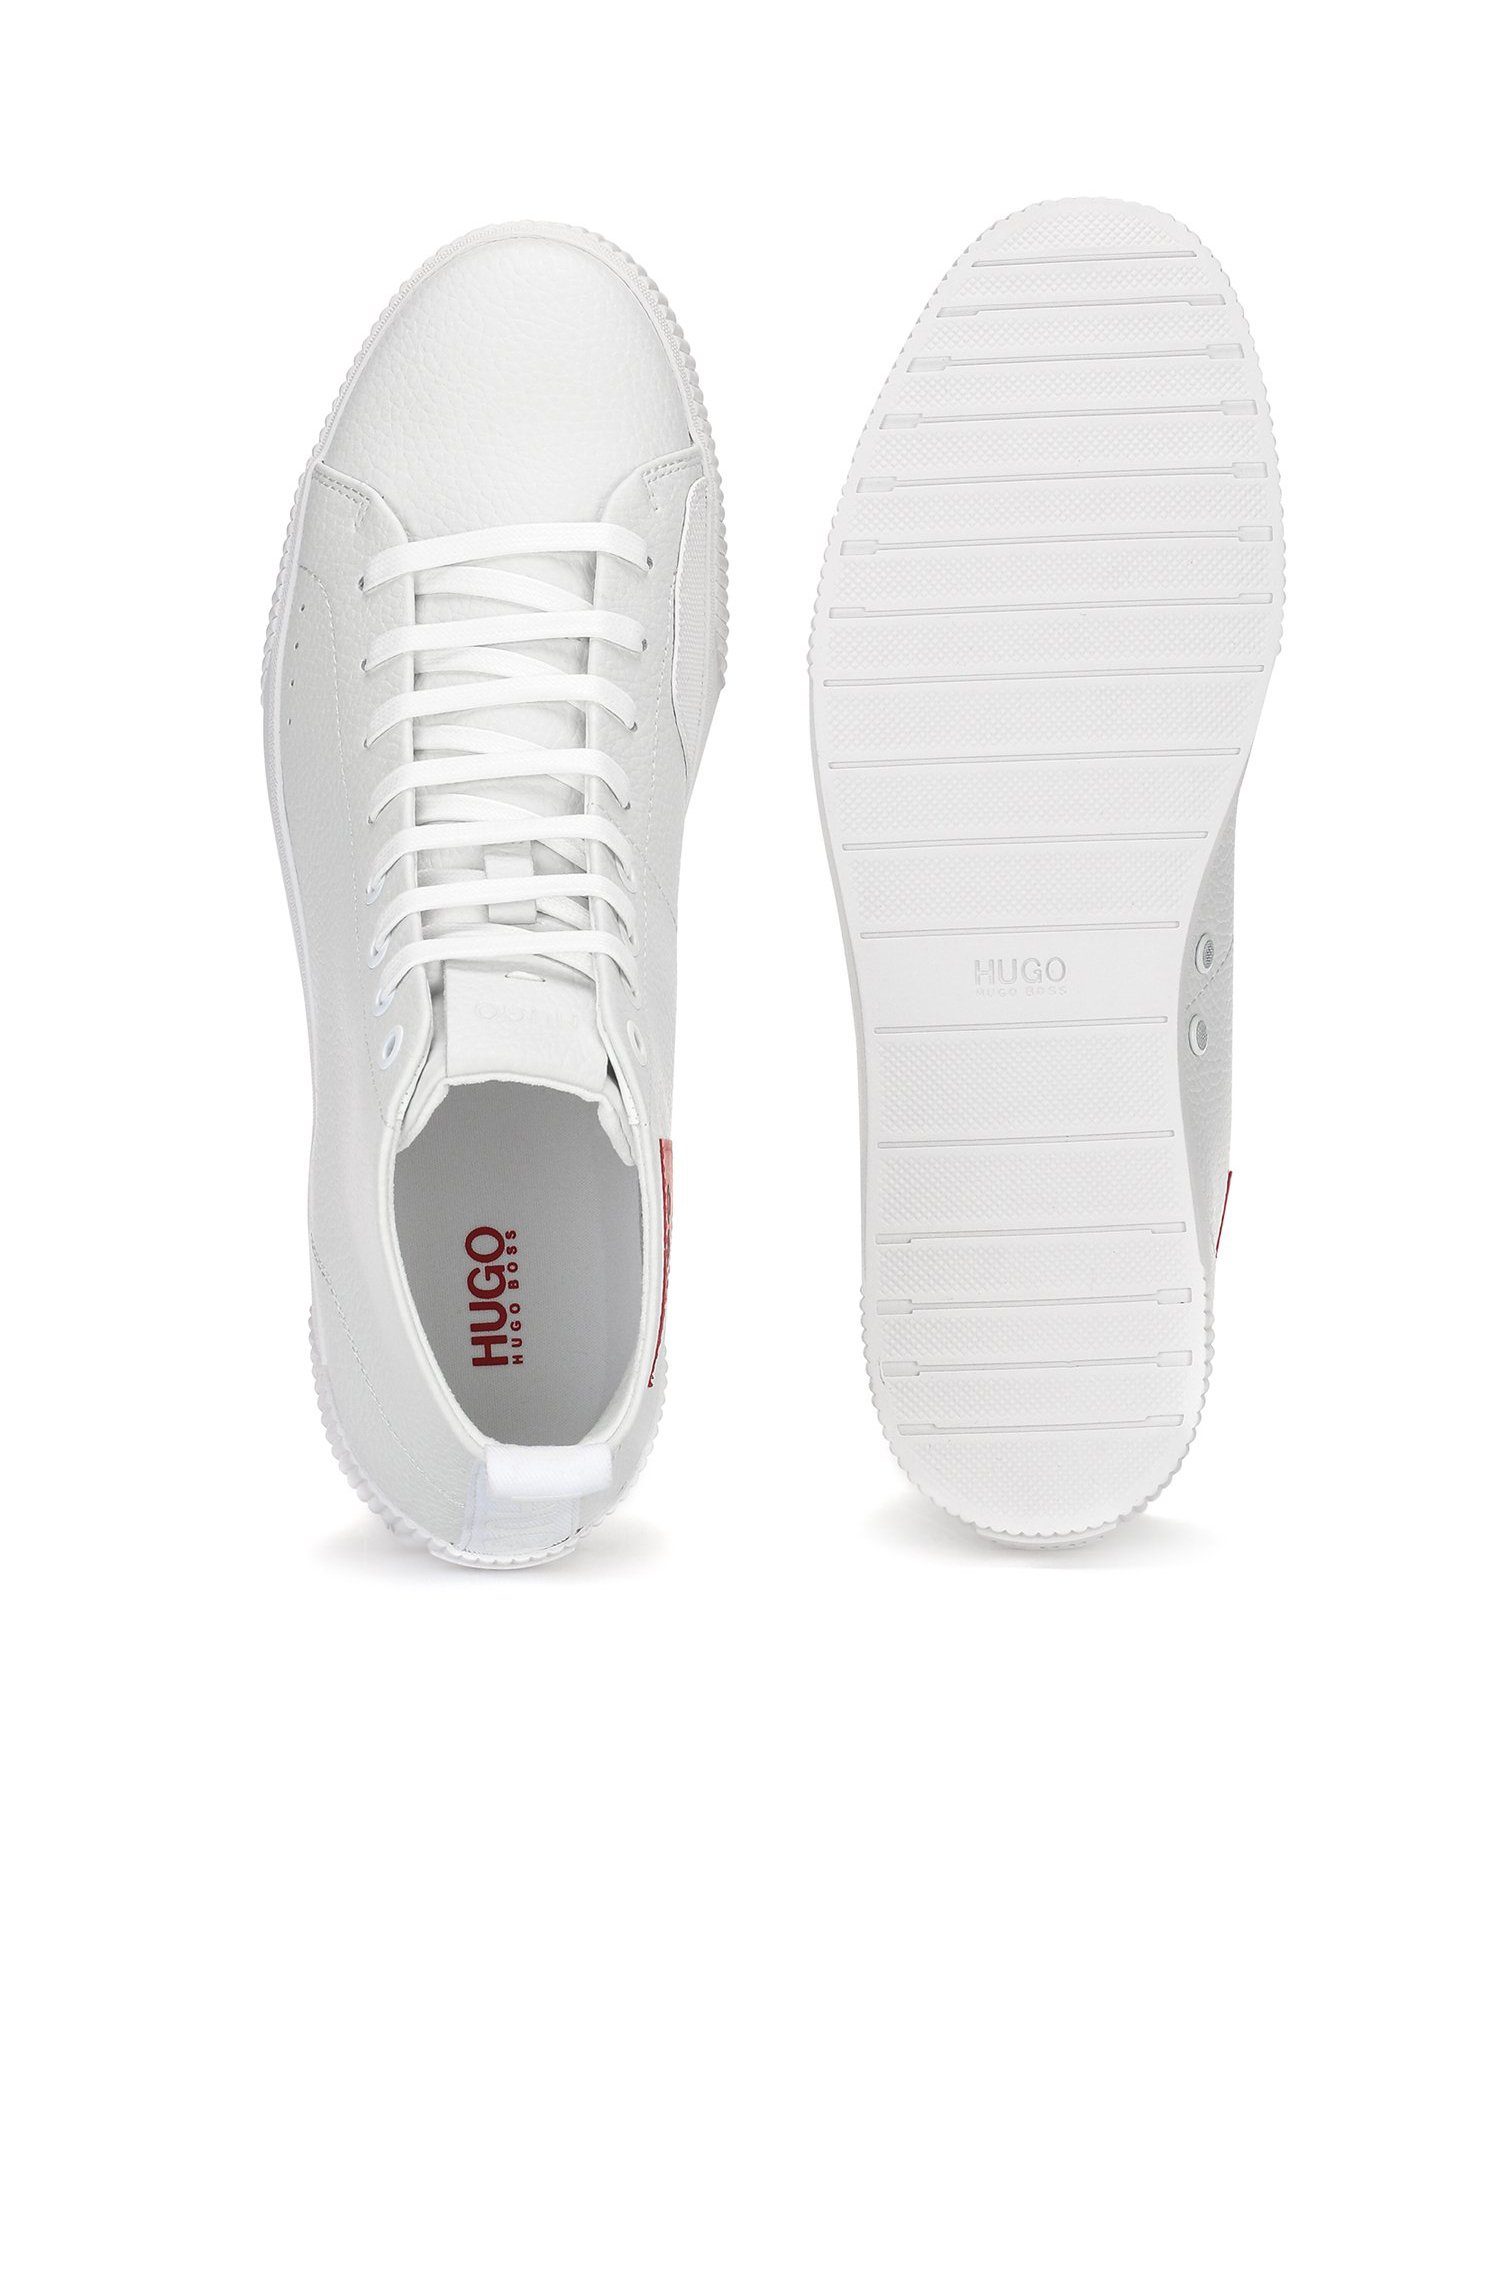 1-tlg) HUGO Weiß (100) Zero_Hito Angabe, (keine Sneaker